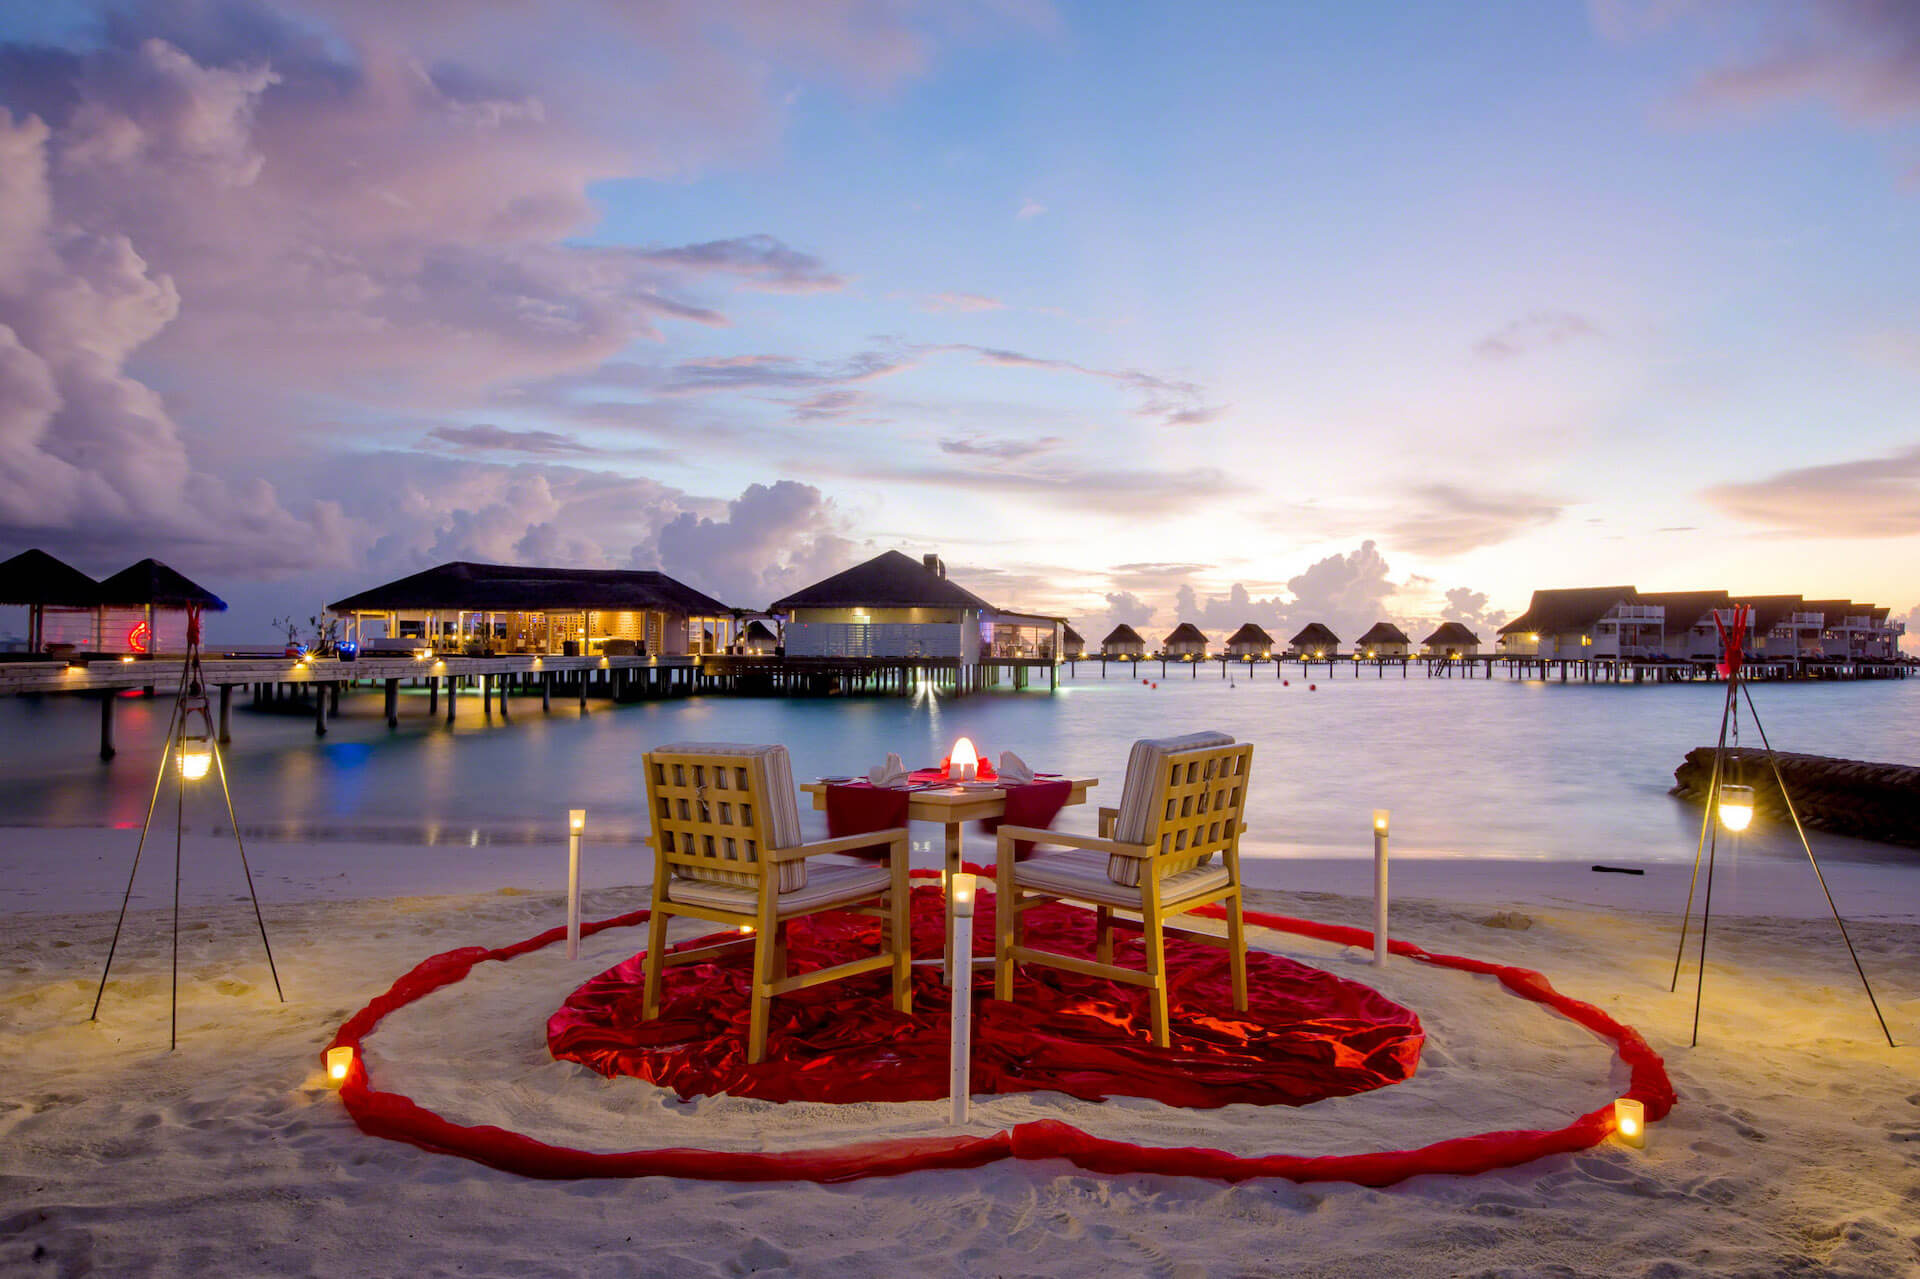 Centara adventure. Grand Centara Мальдивы Мальдивы отель. Centara Grand Island Resort & Spa. Centara Grand Island Resort & Spa 5*. Мальдивы Резорт романтика.